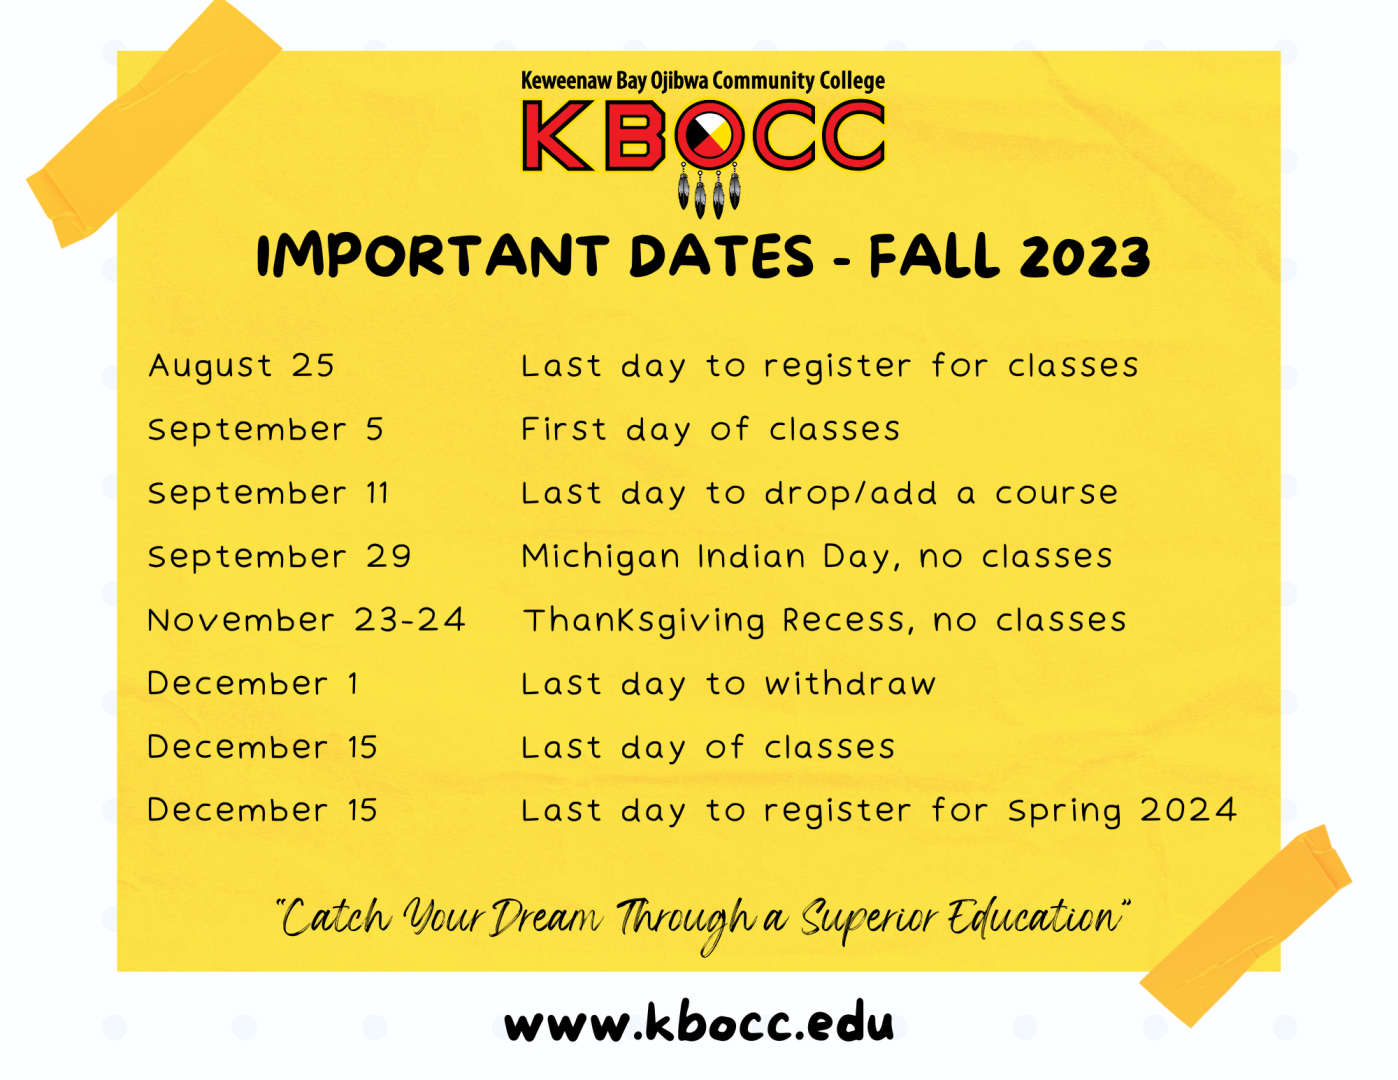 Fall 2023 Important Dates Keweenaw Bay Ojibwa Community College